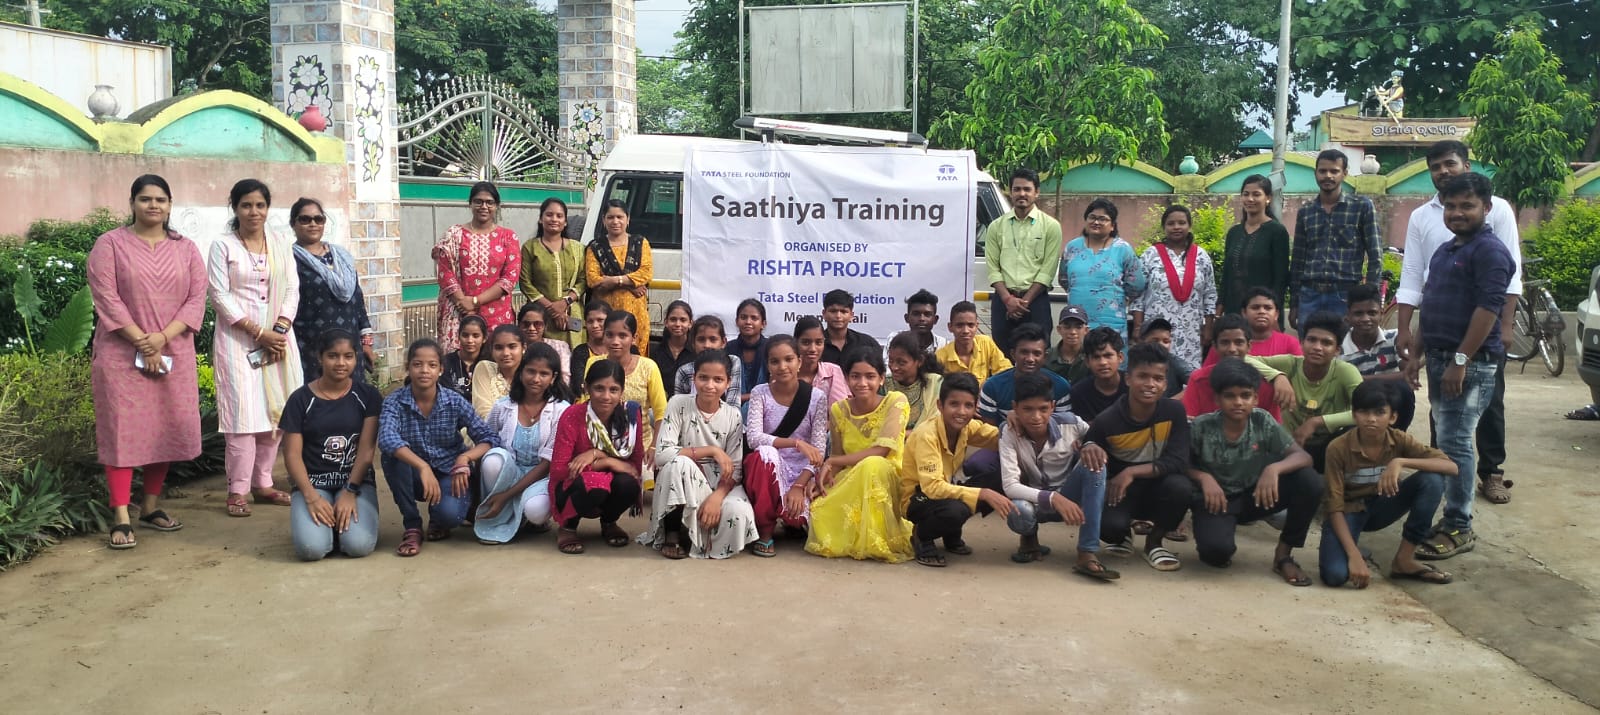 Tata Steel Foundation’s RISHTA Initiative Organises Peer Educator Training with Village Adolescents